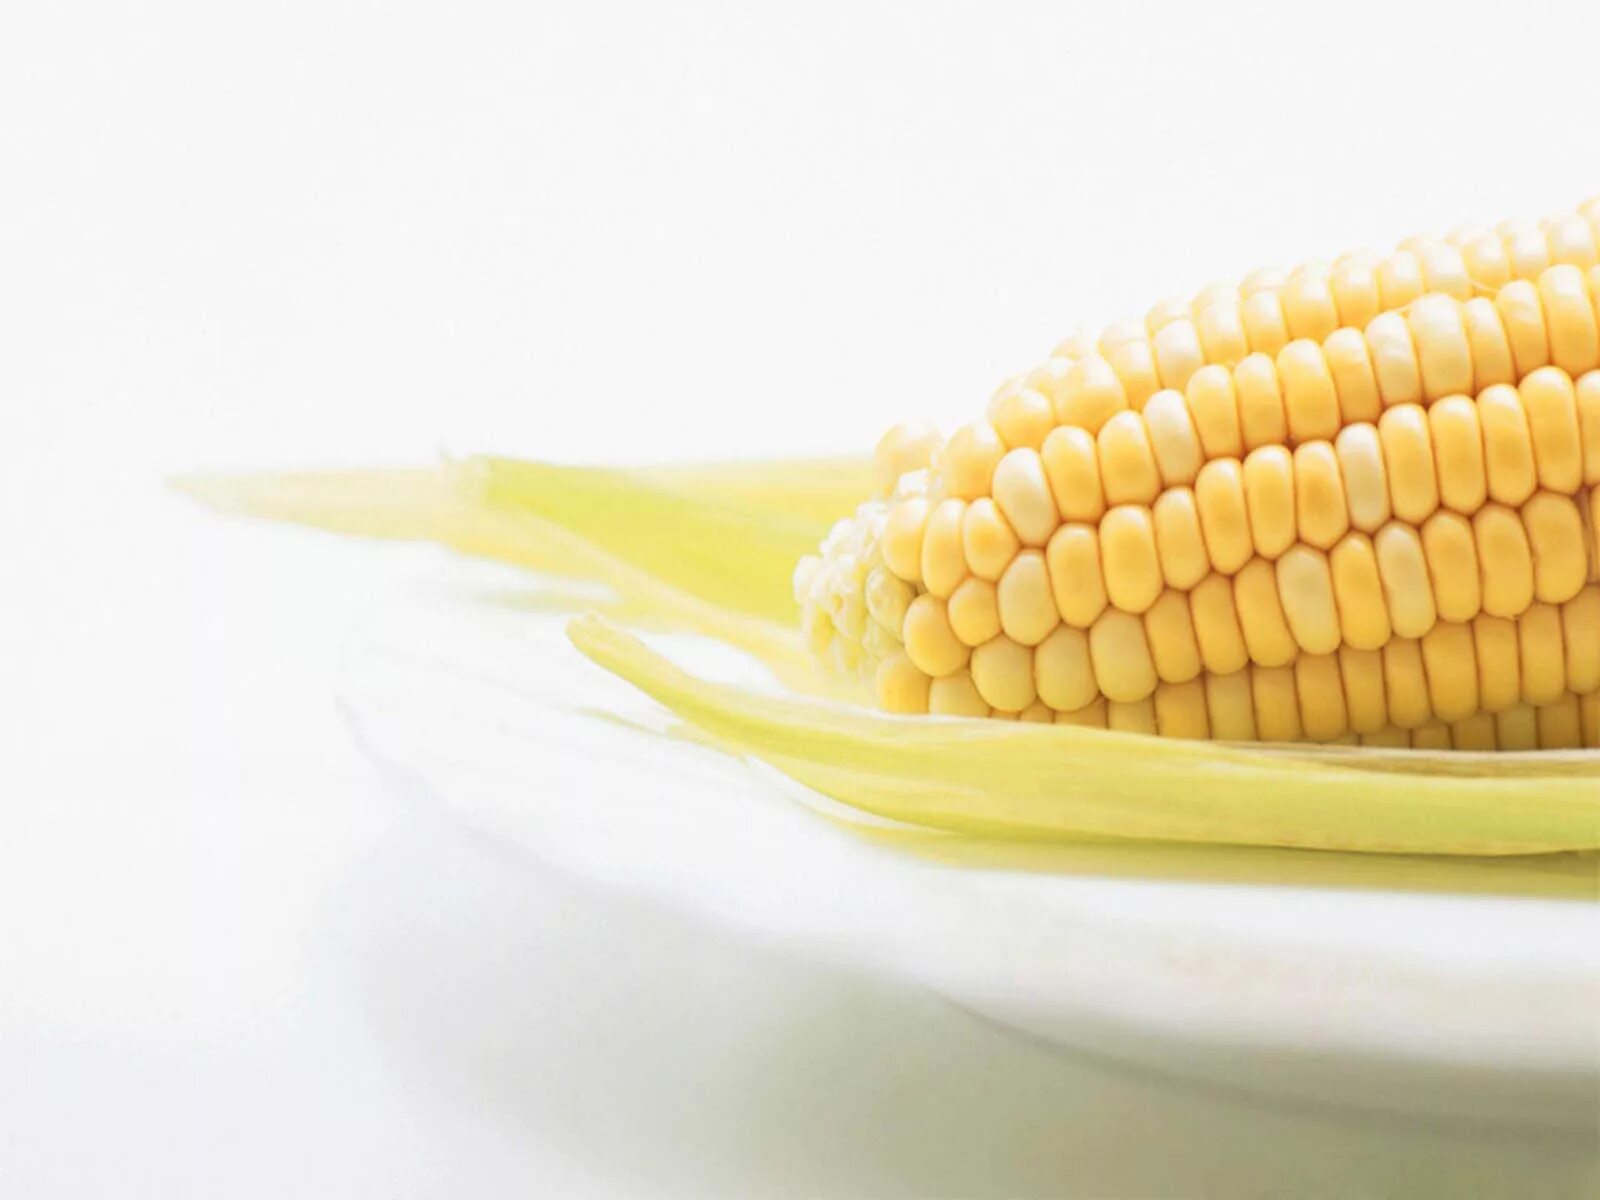 Corn на русском. Кукуруза. Кукуруза фон. Вареная кукуруза. Кукуруза (зерно).